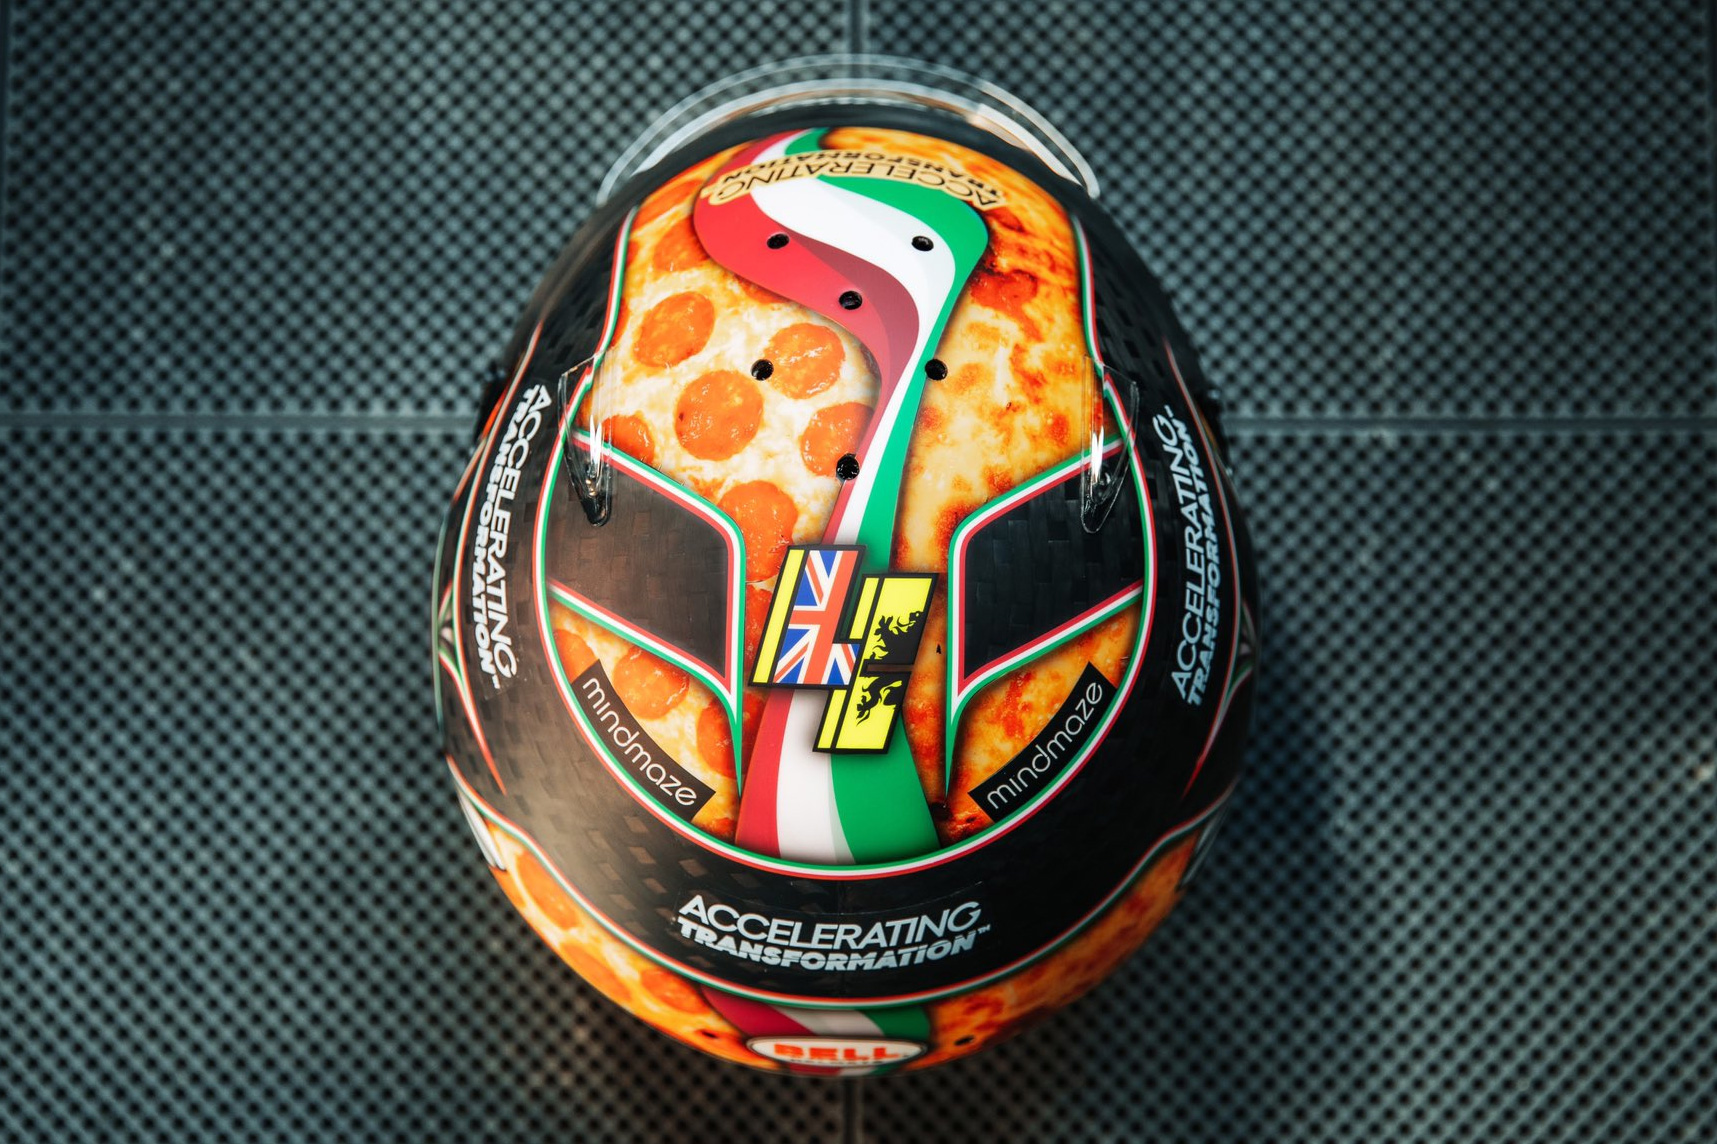 Lando Norris 2020 Italian Grand Prix helmet